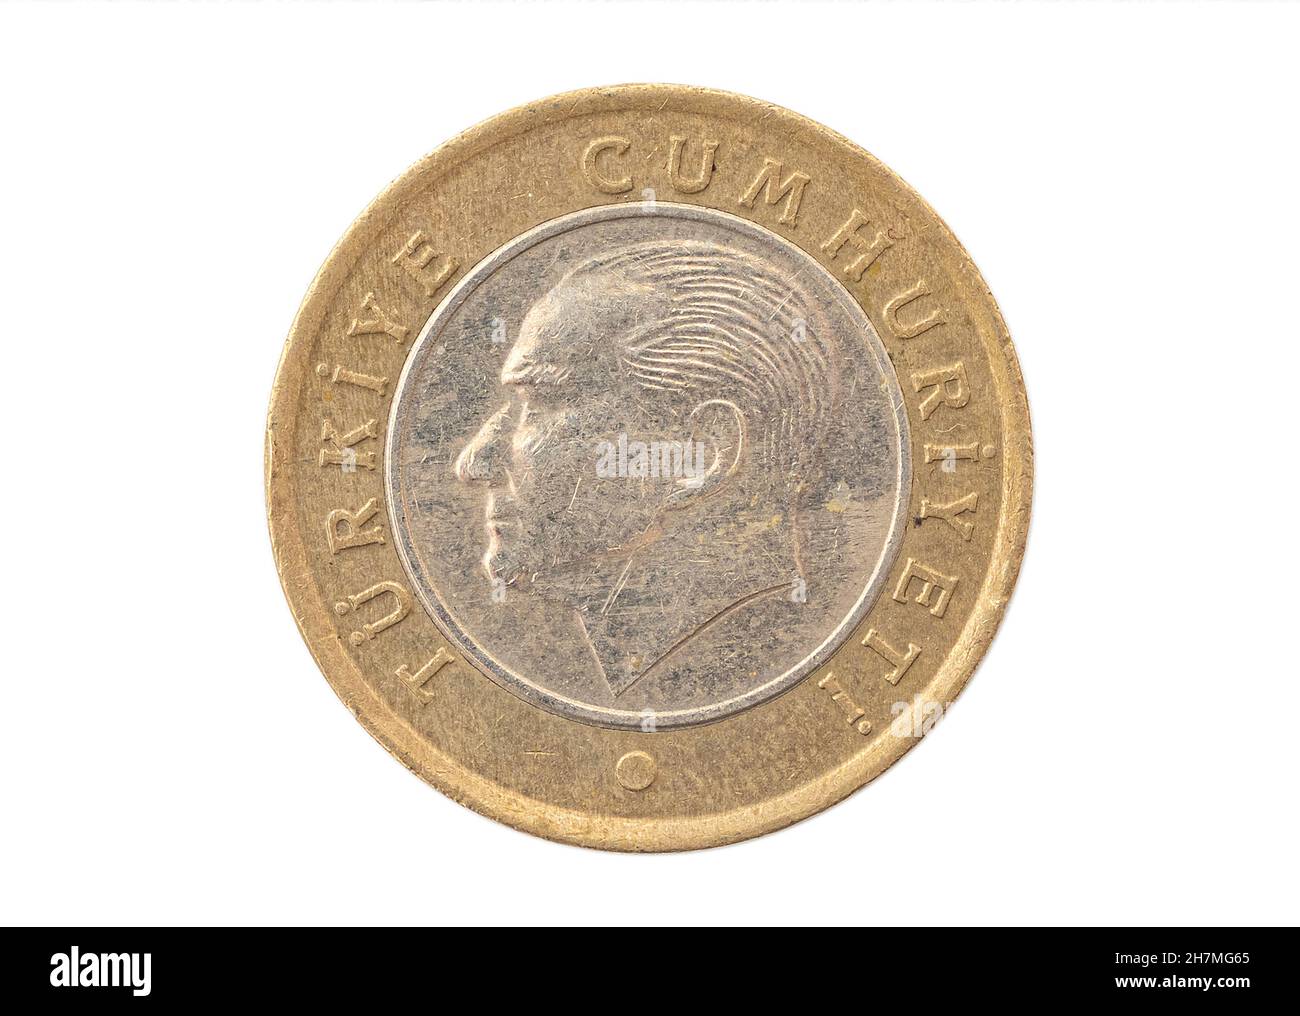 Turkish lira, scratched iron coin isolated on white. turkish money with Kemal Ataturk portrait. Stock Photo